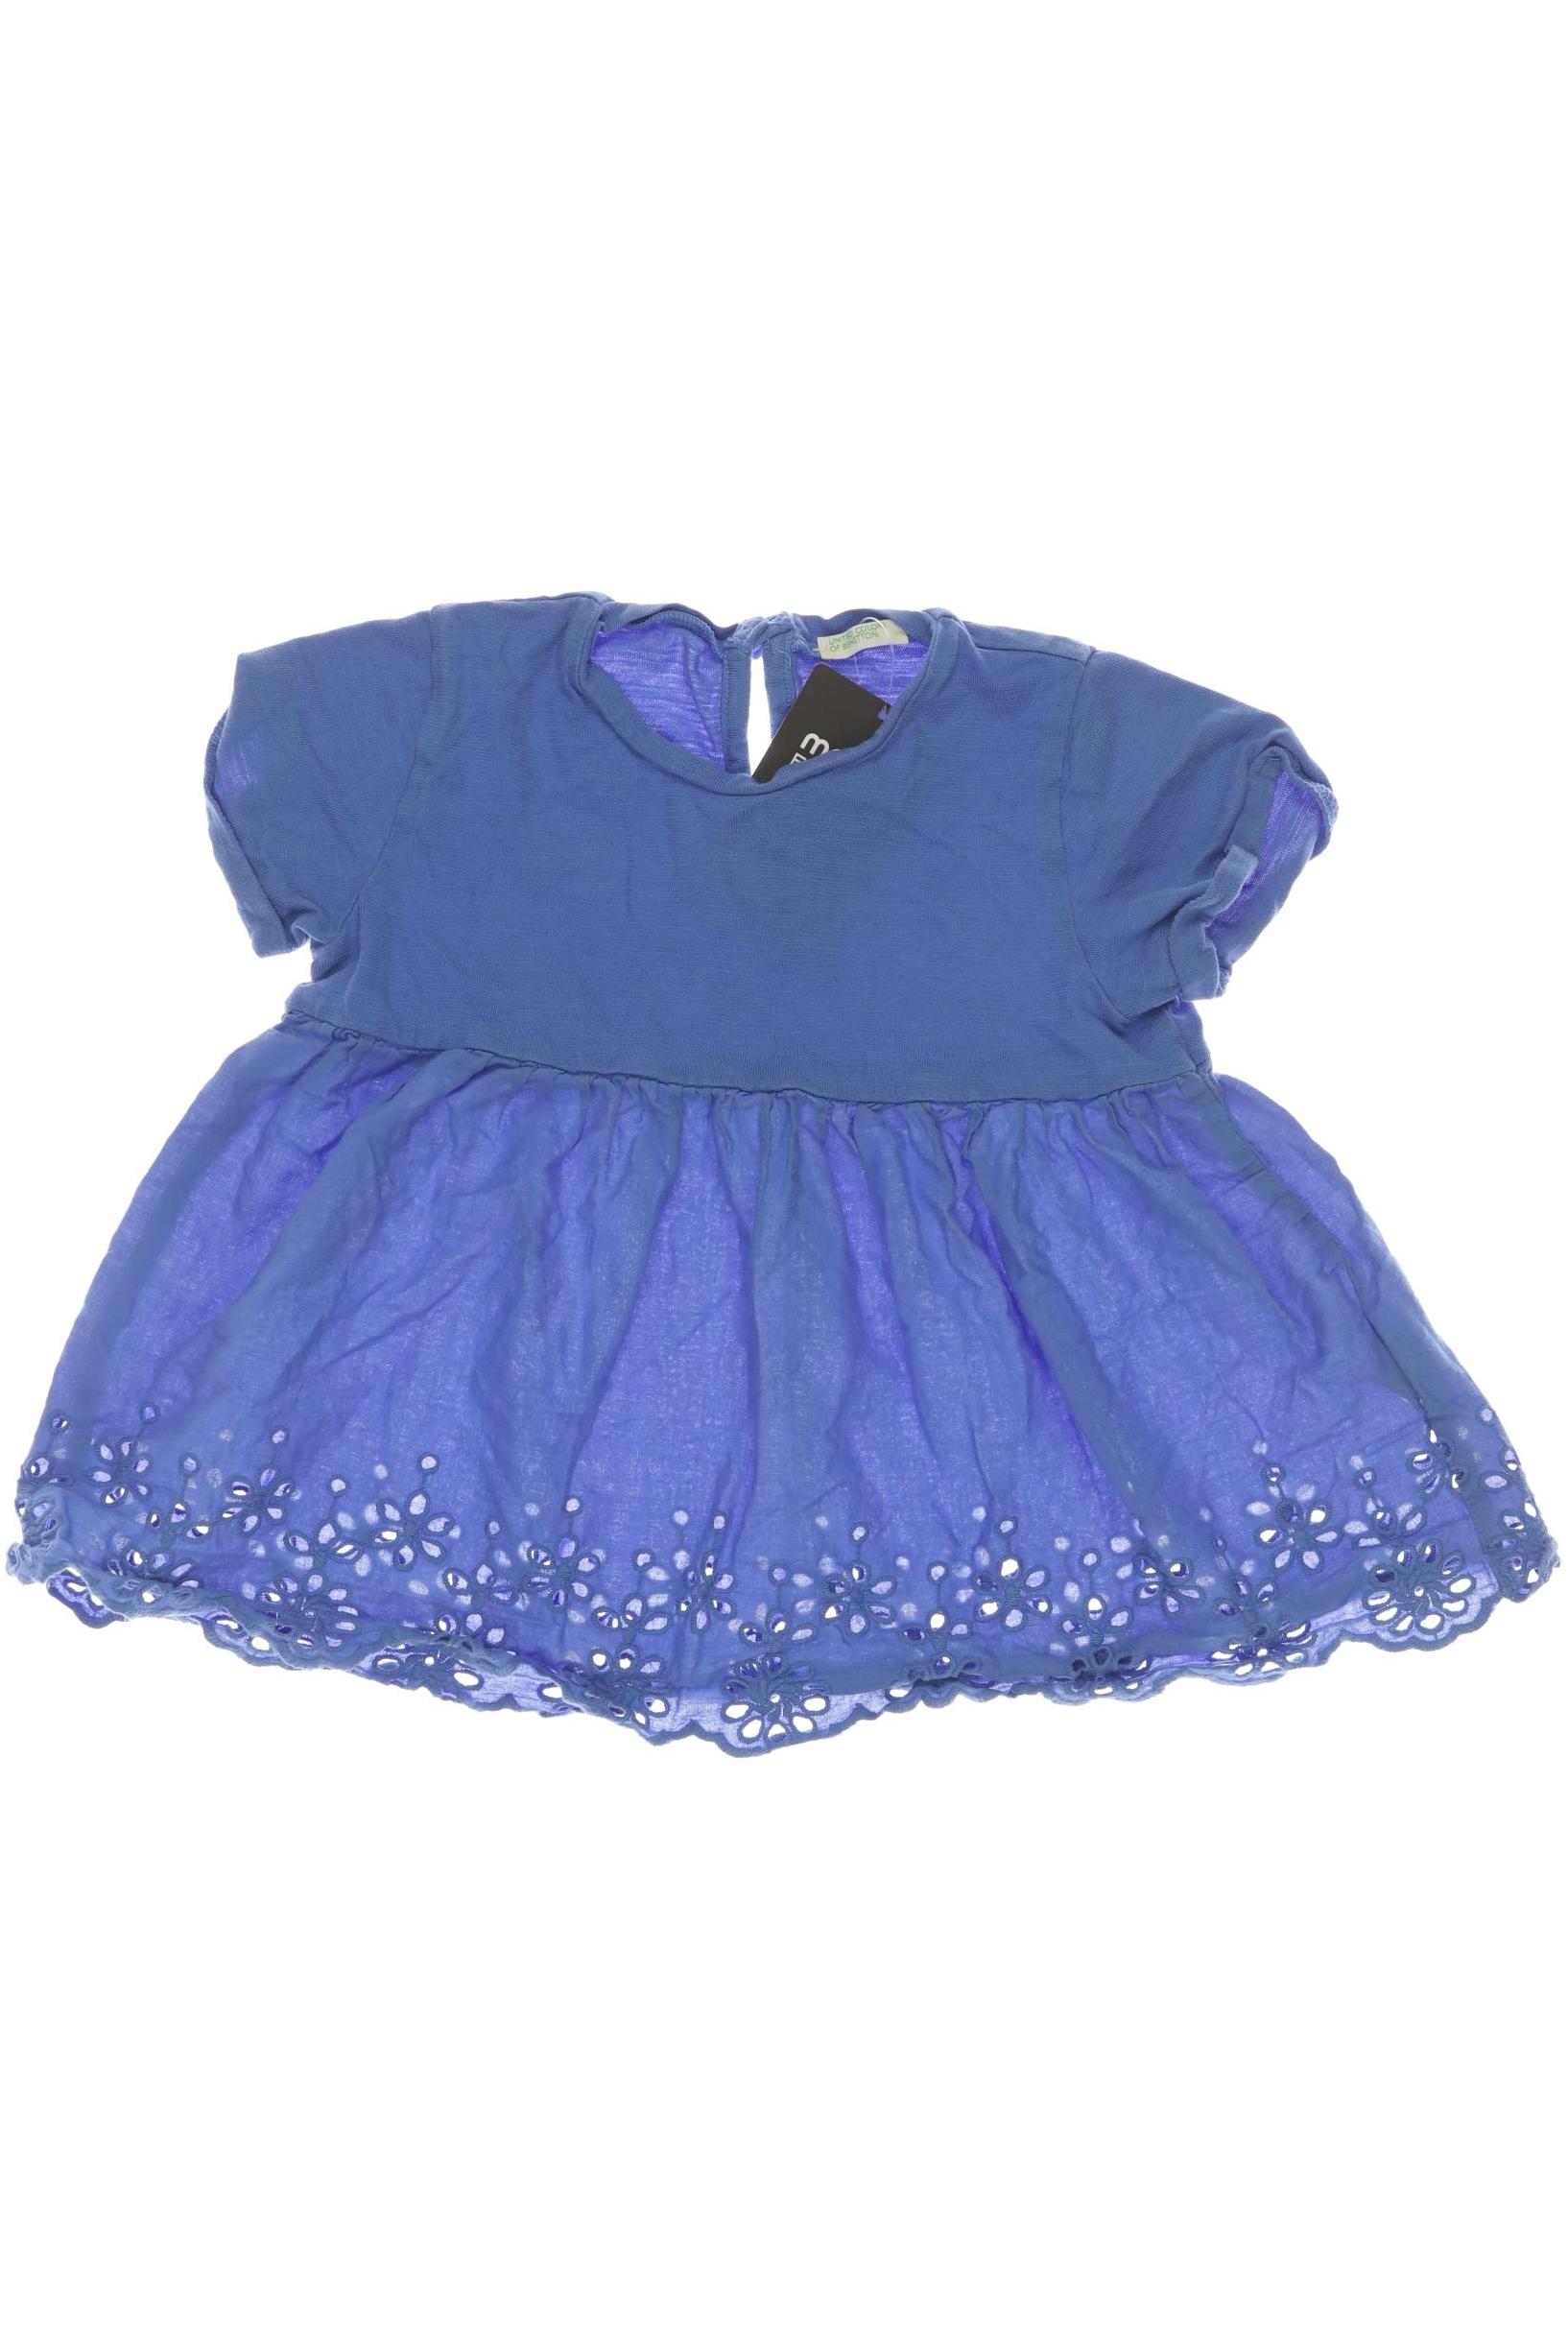 UNITED COLORS OF BENETTON Damen Kleid, blau von United Colors of Benetton